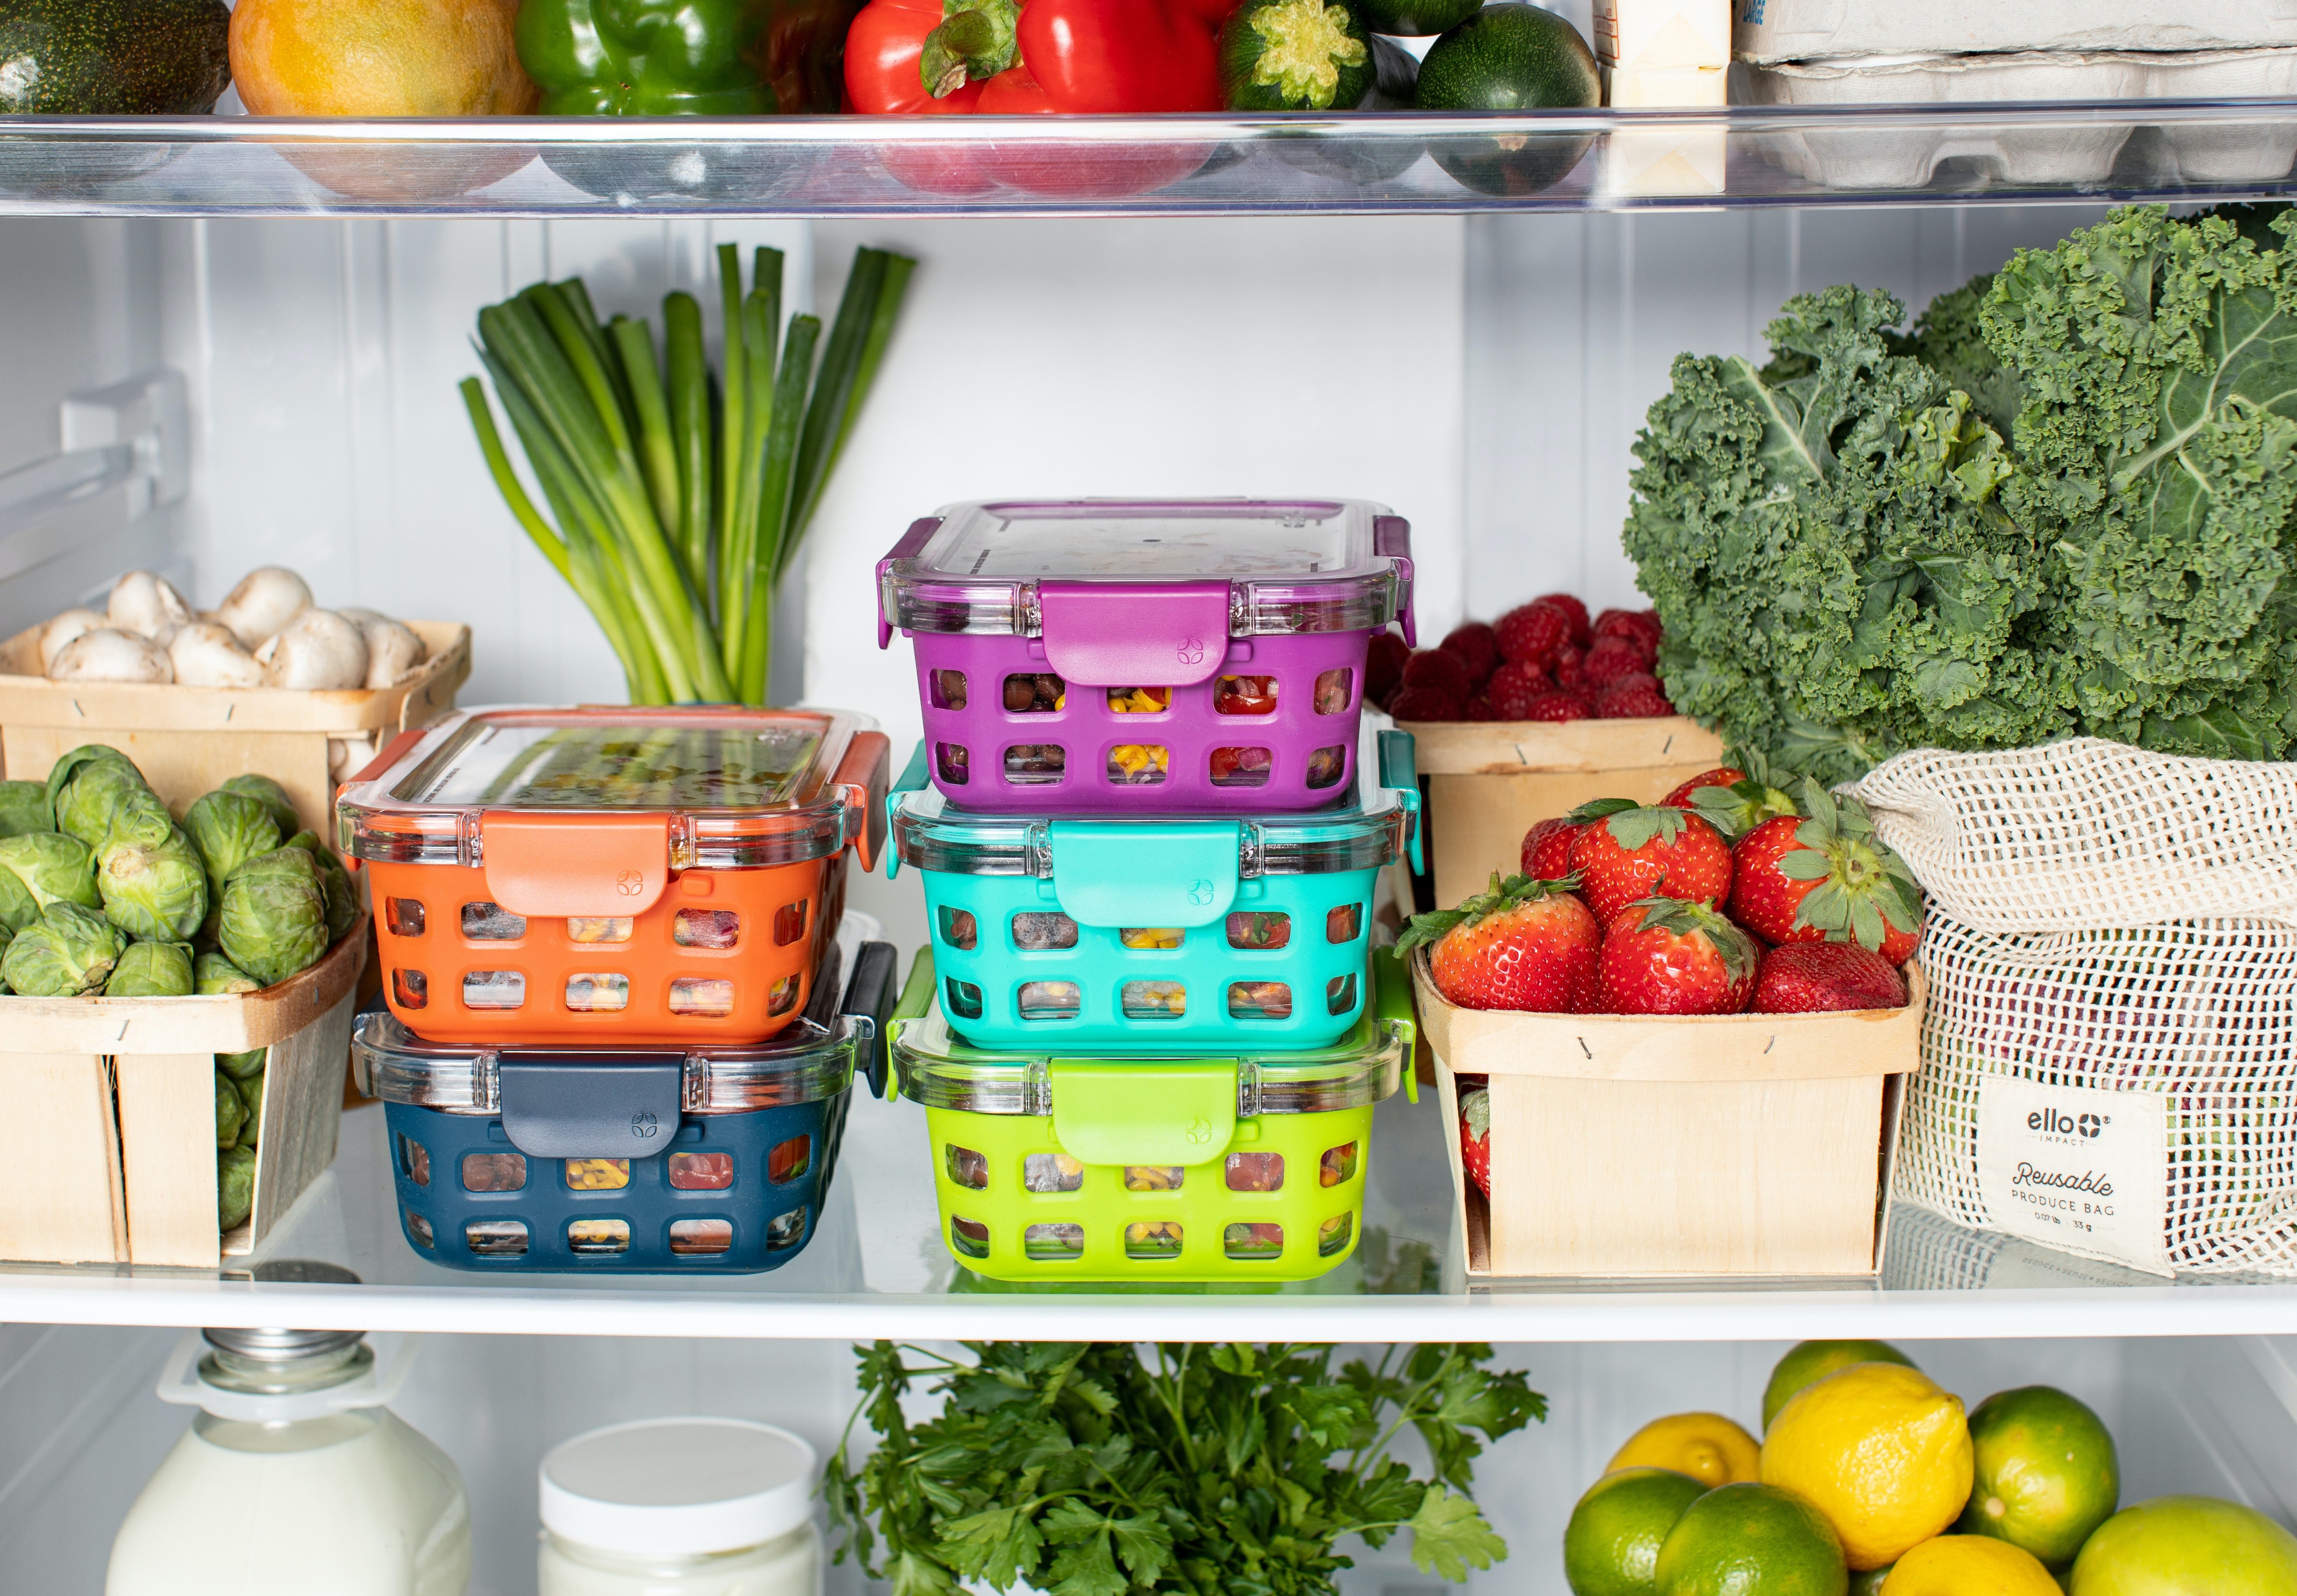 Food in refrigerator | Shutterstock